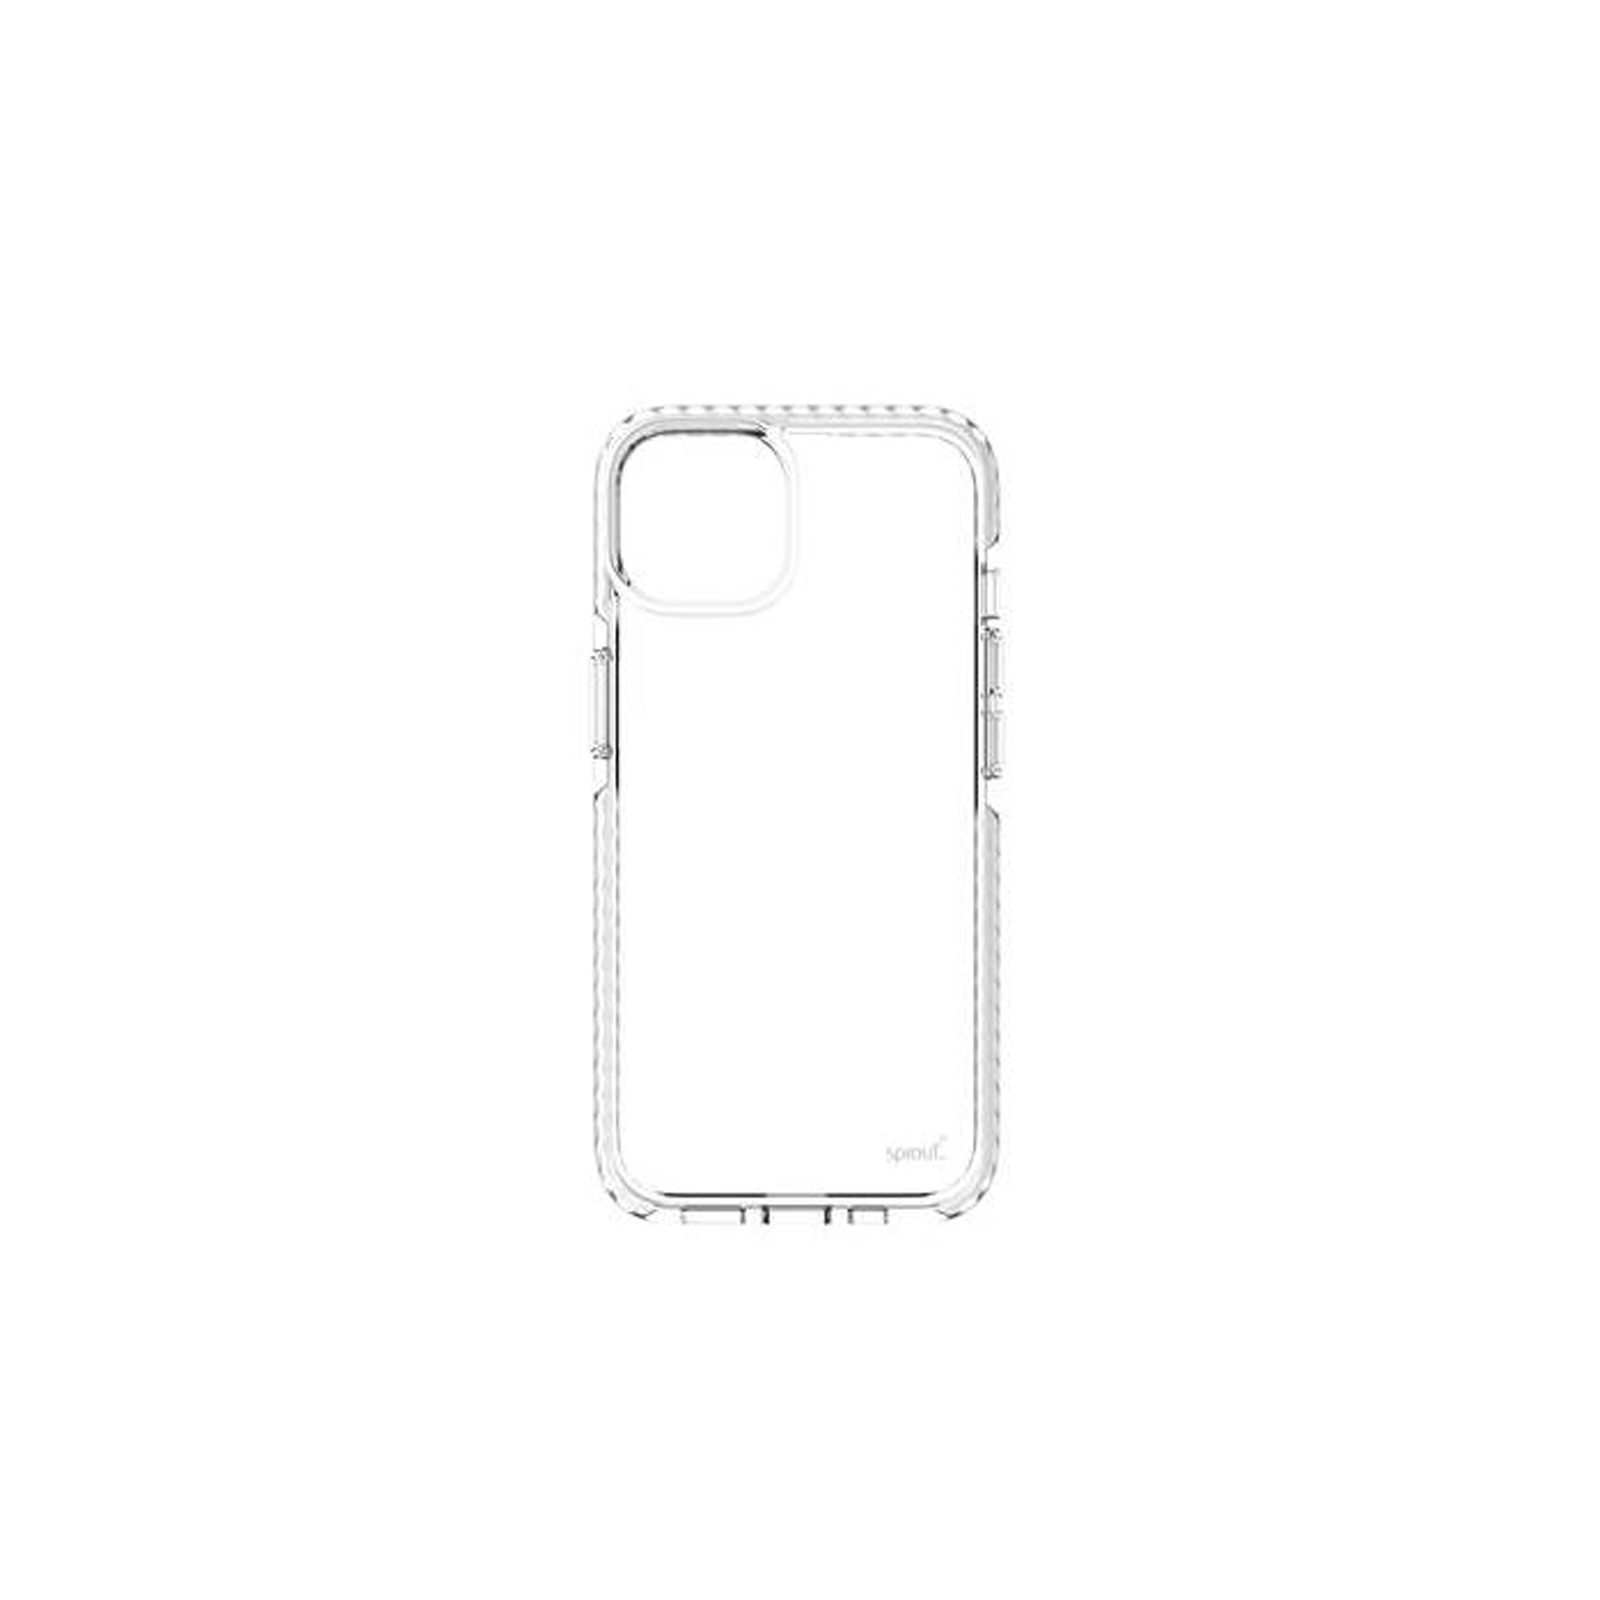 DHC Case iPhone 12 Mini White - Brand New